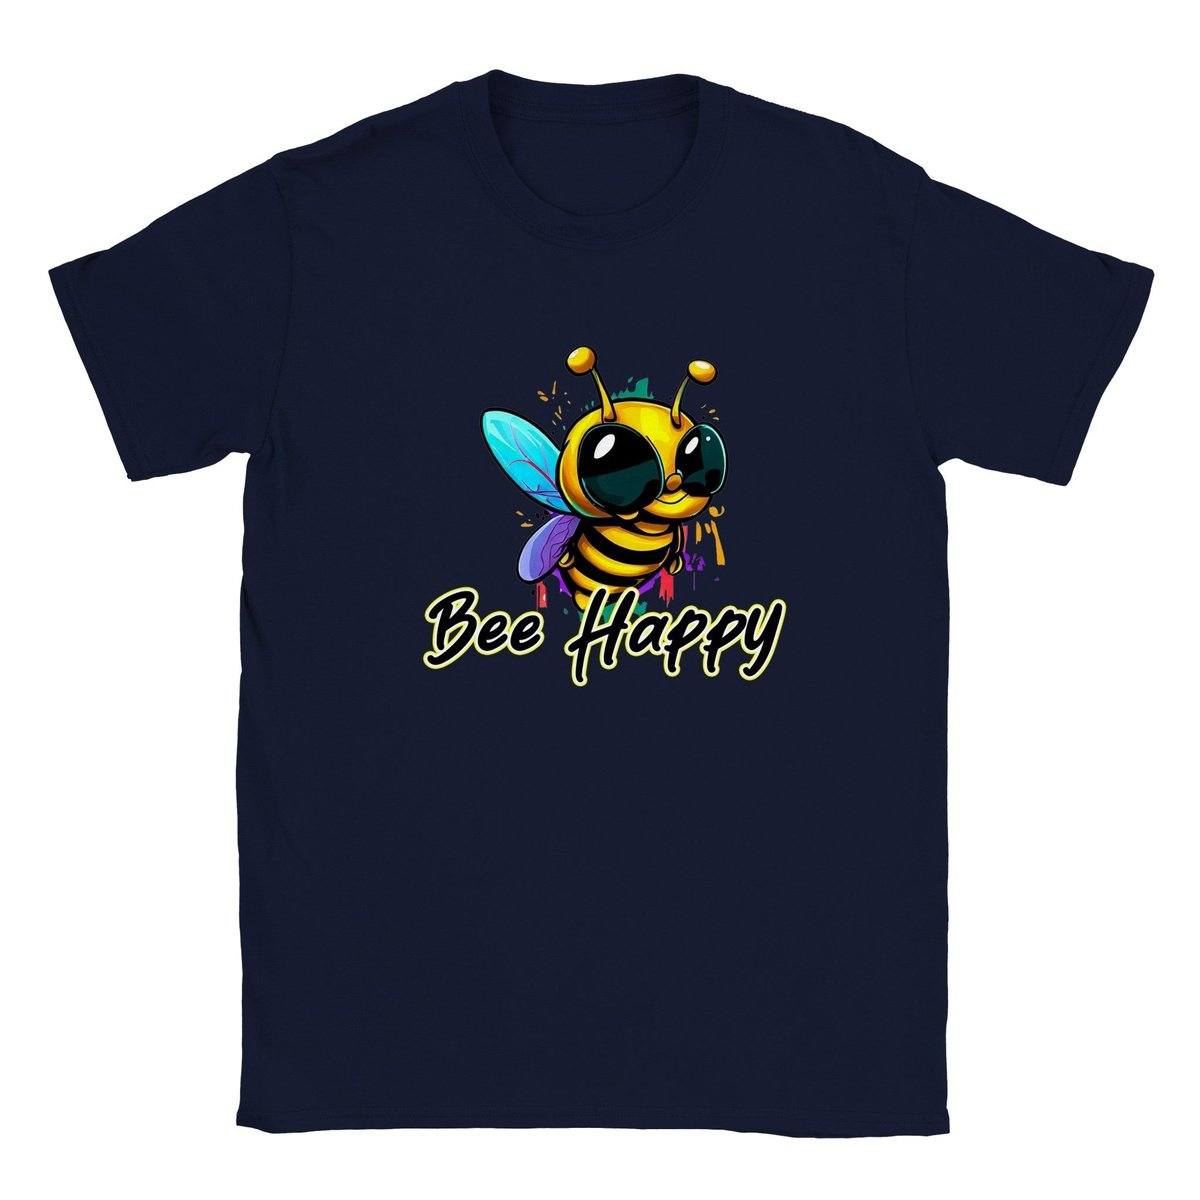 Bee Happy Kids T-shirt Kids T-Shirts Navy / XS BC Australia